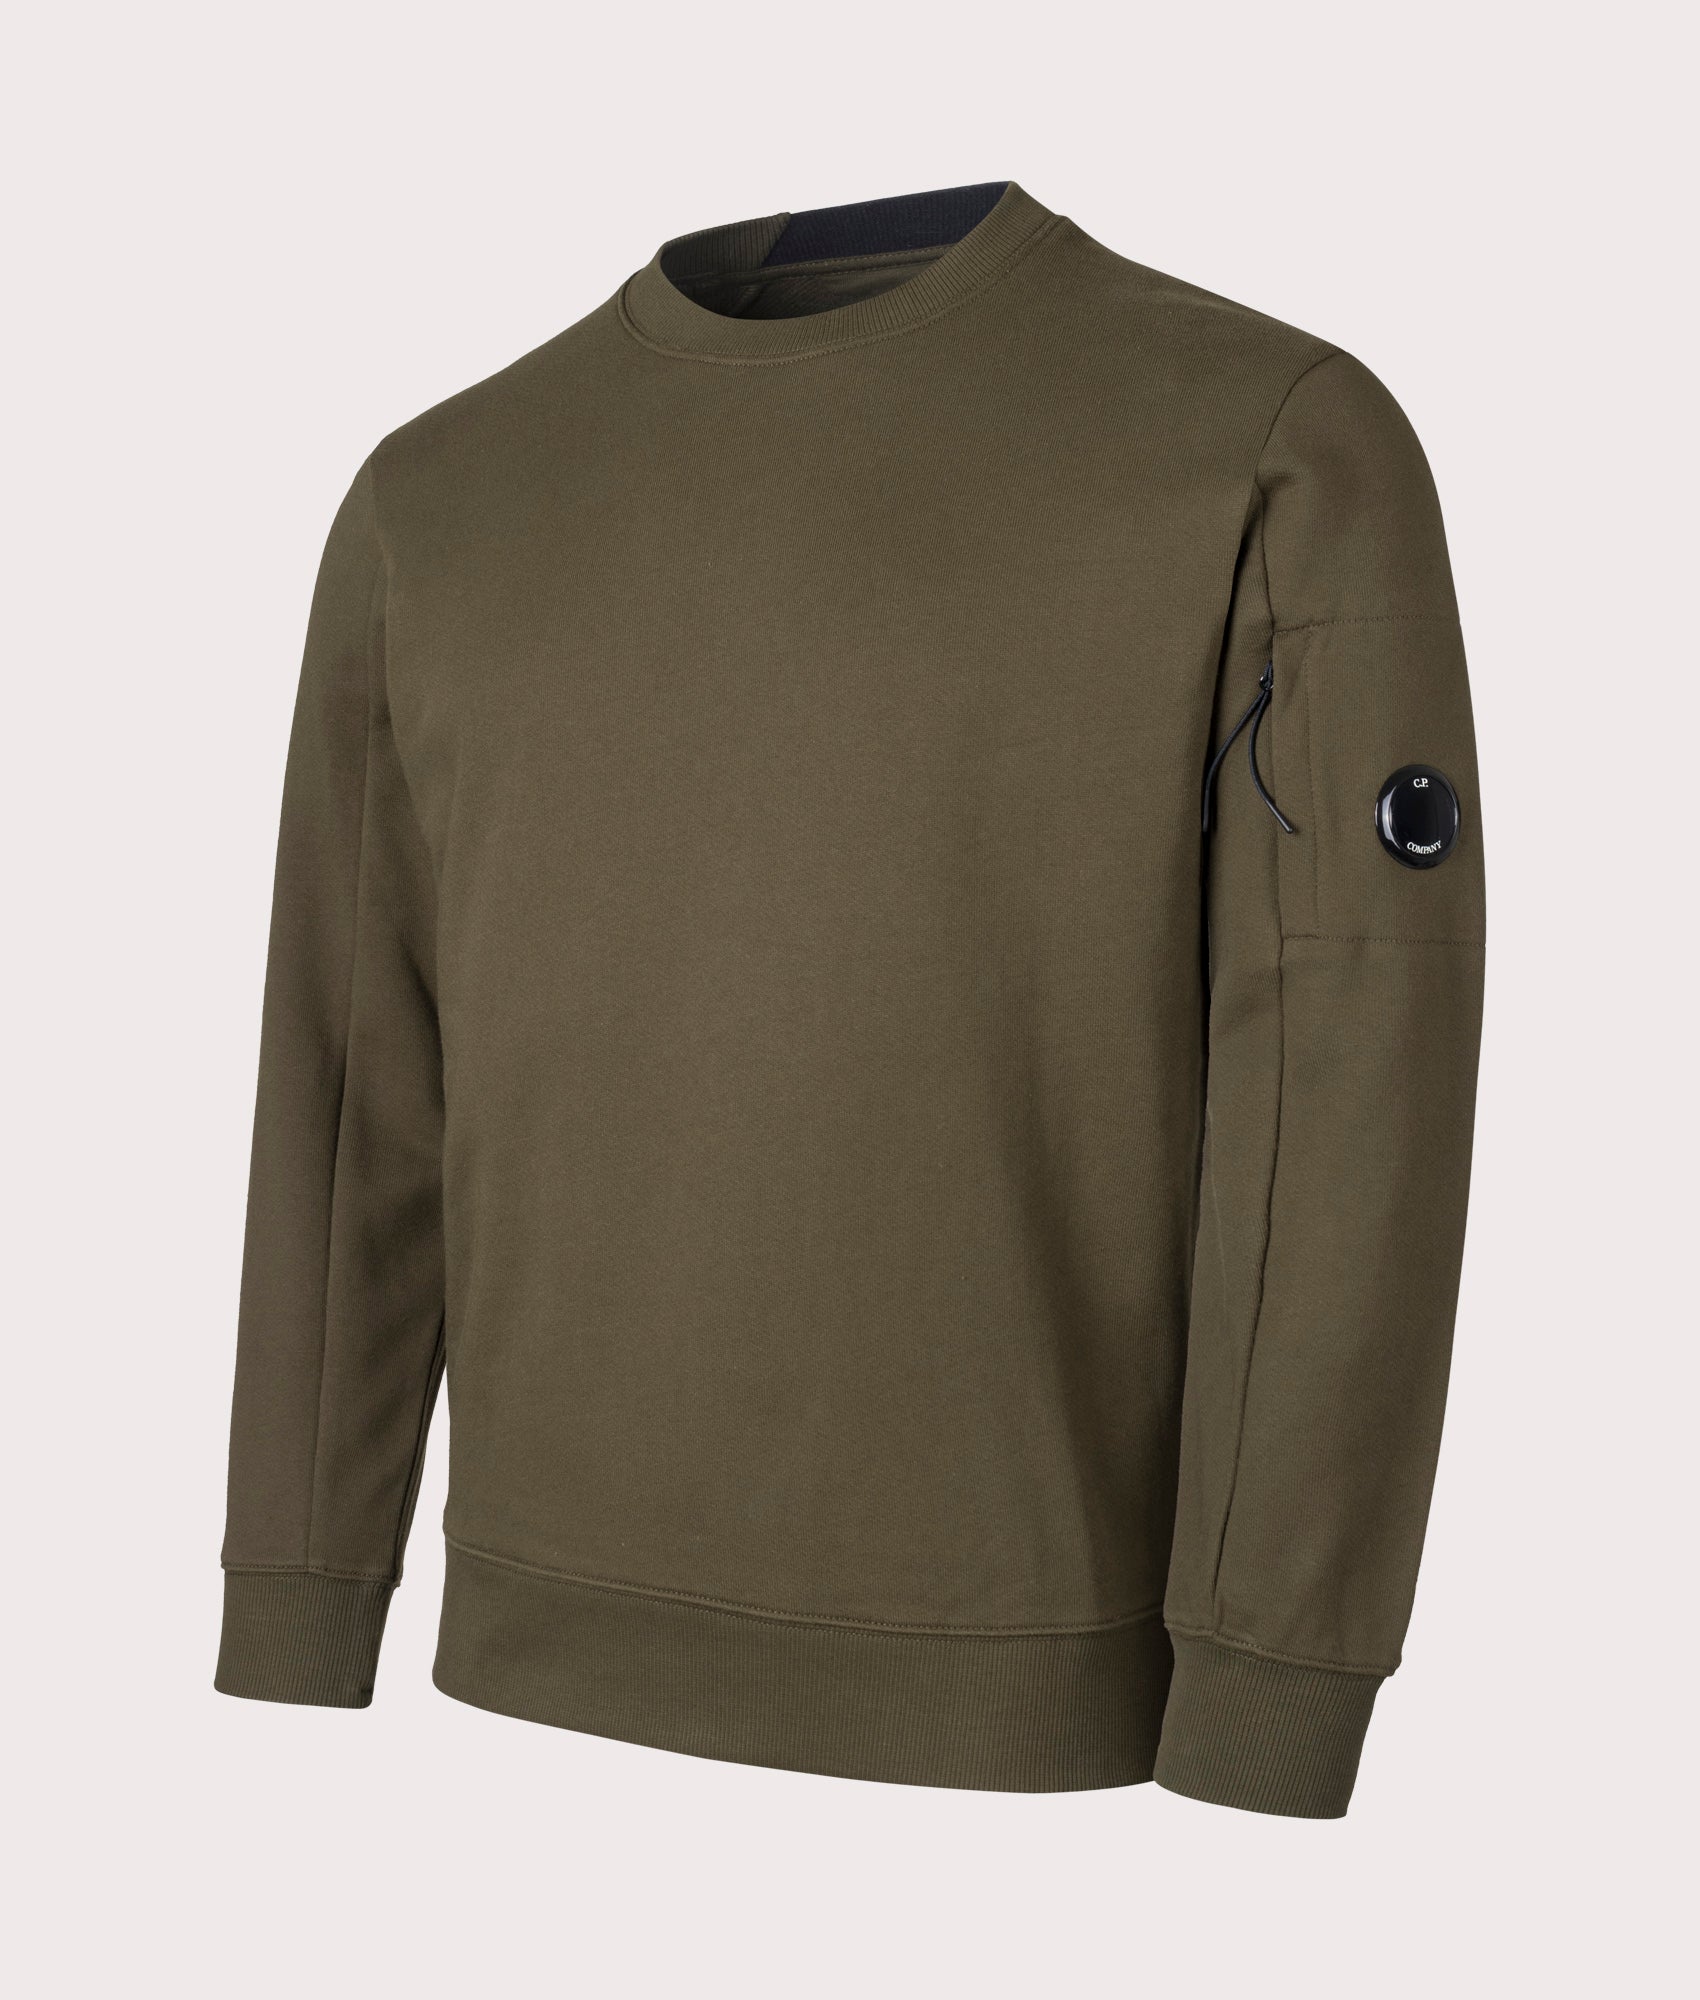 C.P. Company Mens Diagonal Raised Fleece Sweatshirt - Colour: 683 Ivy Green - Size: Large